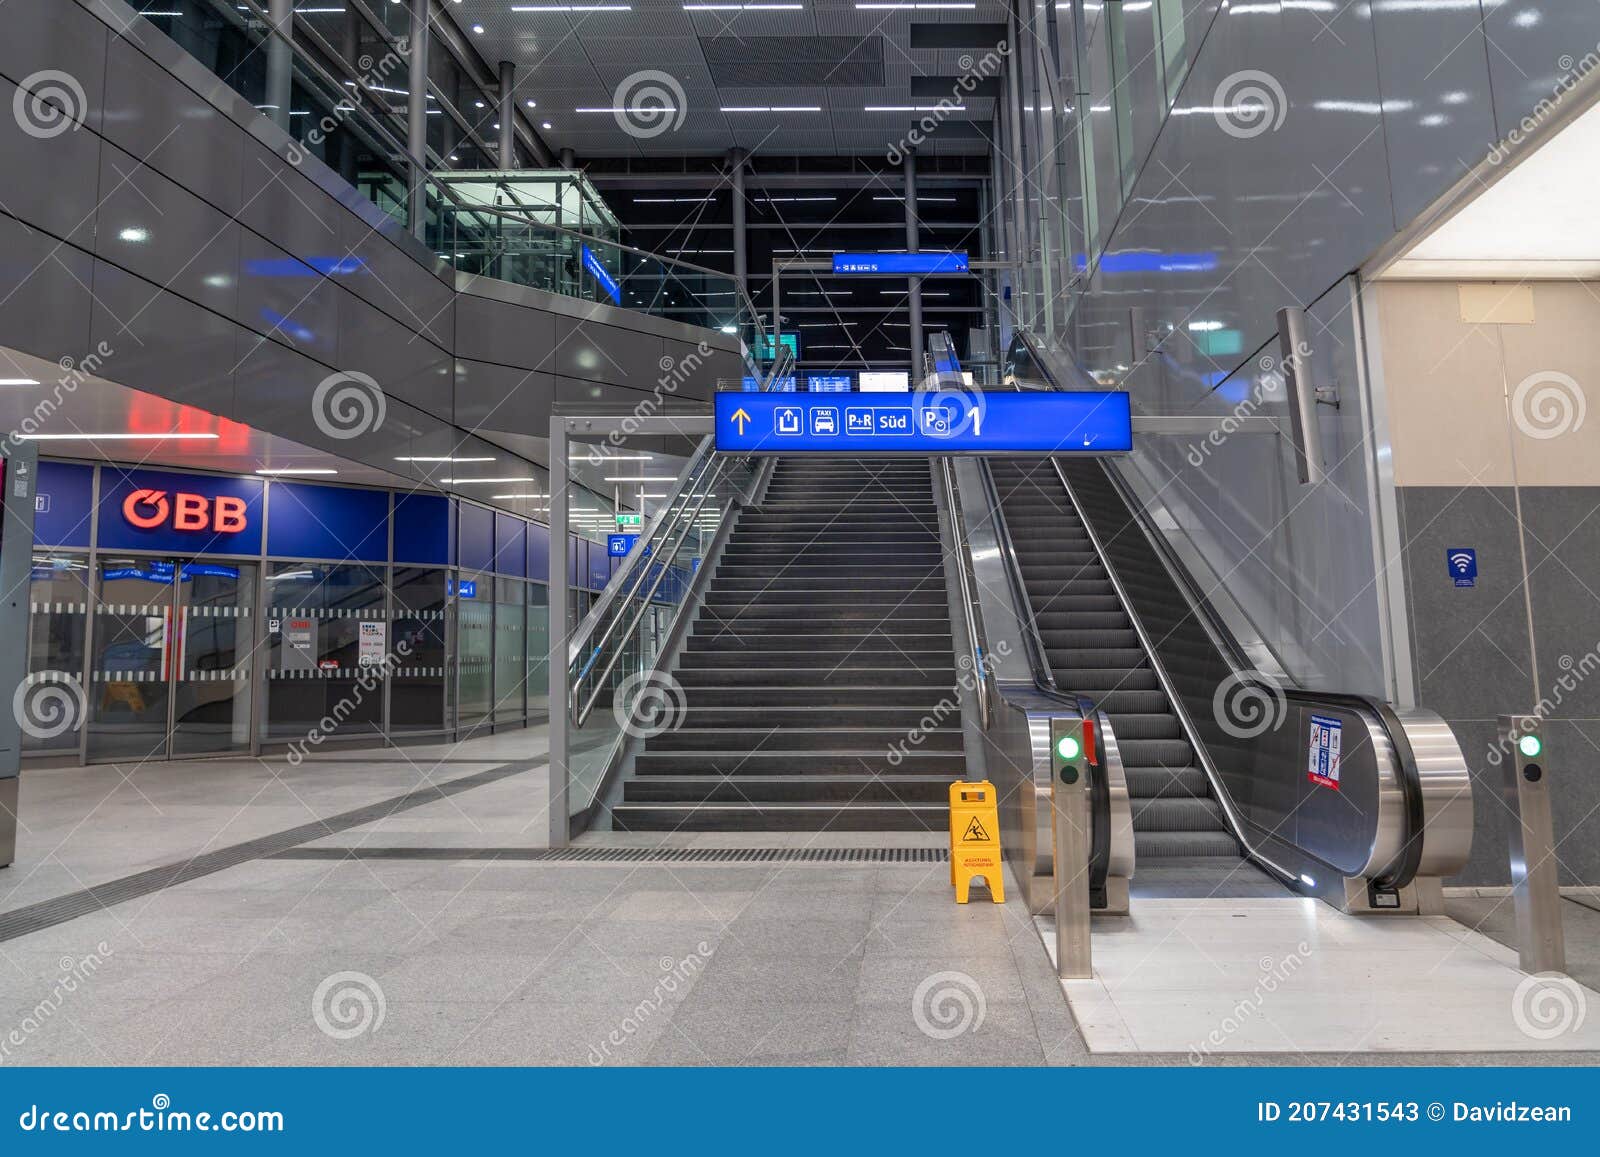 Feb 6, 2020 - Attnang Puchheim, Austria: Escalator at Empty Train ...